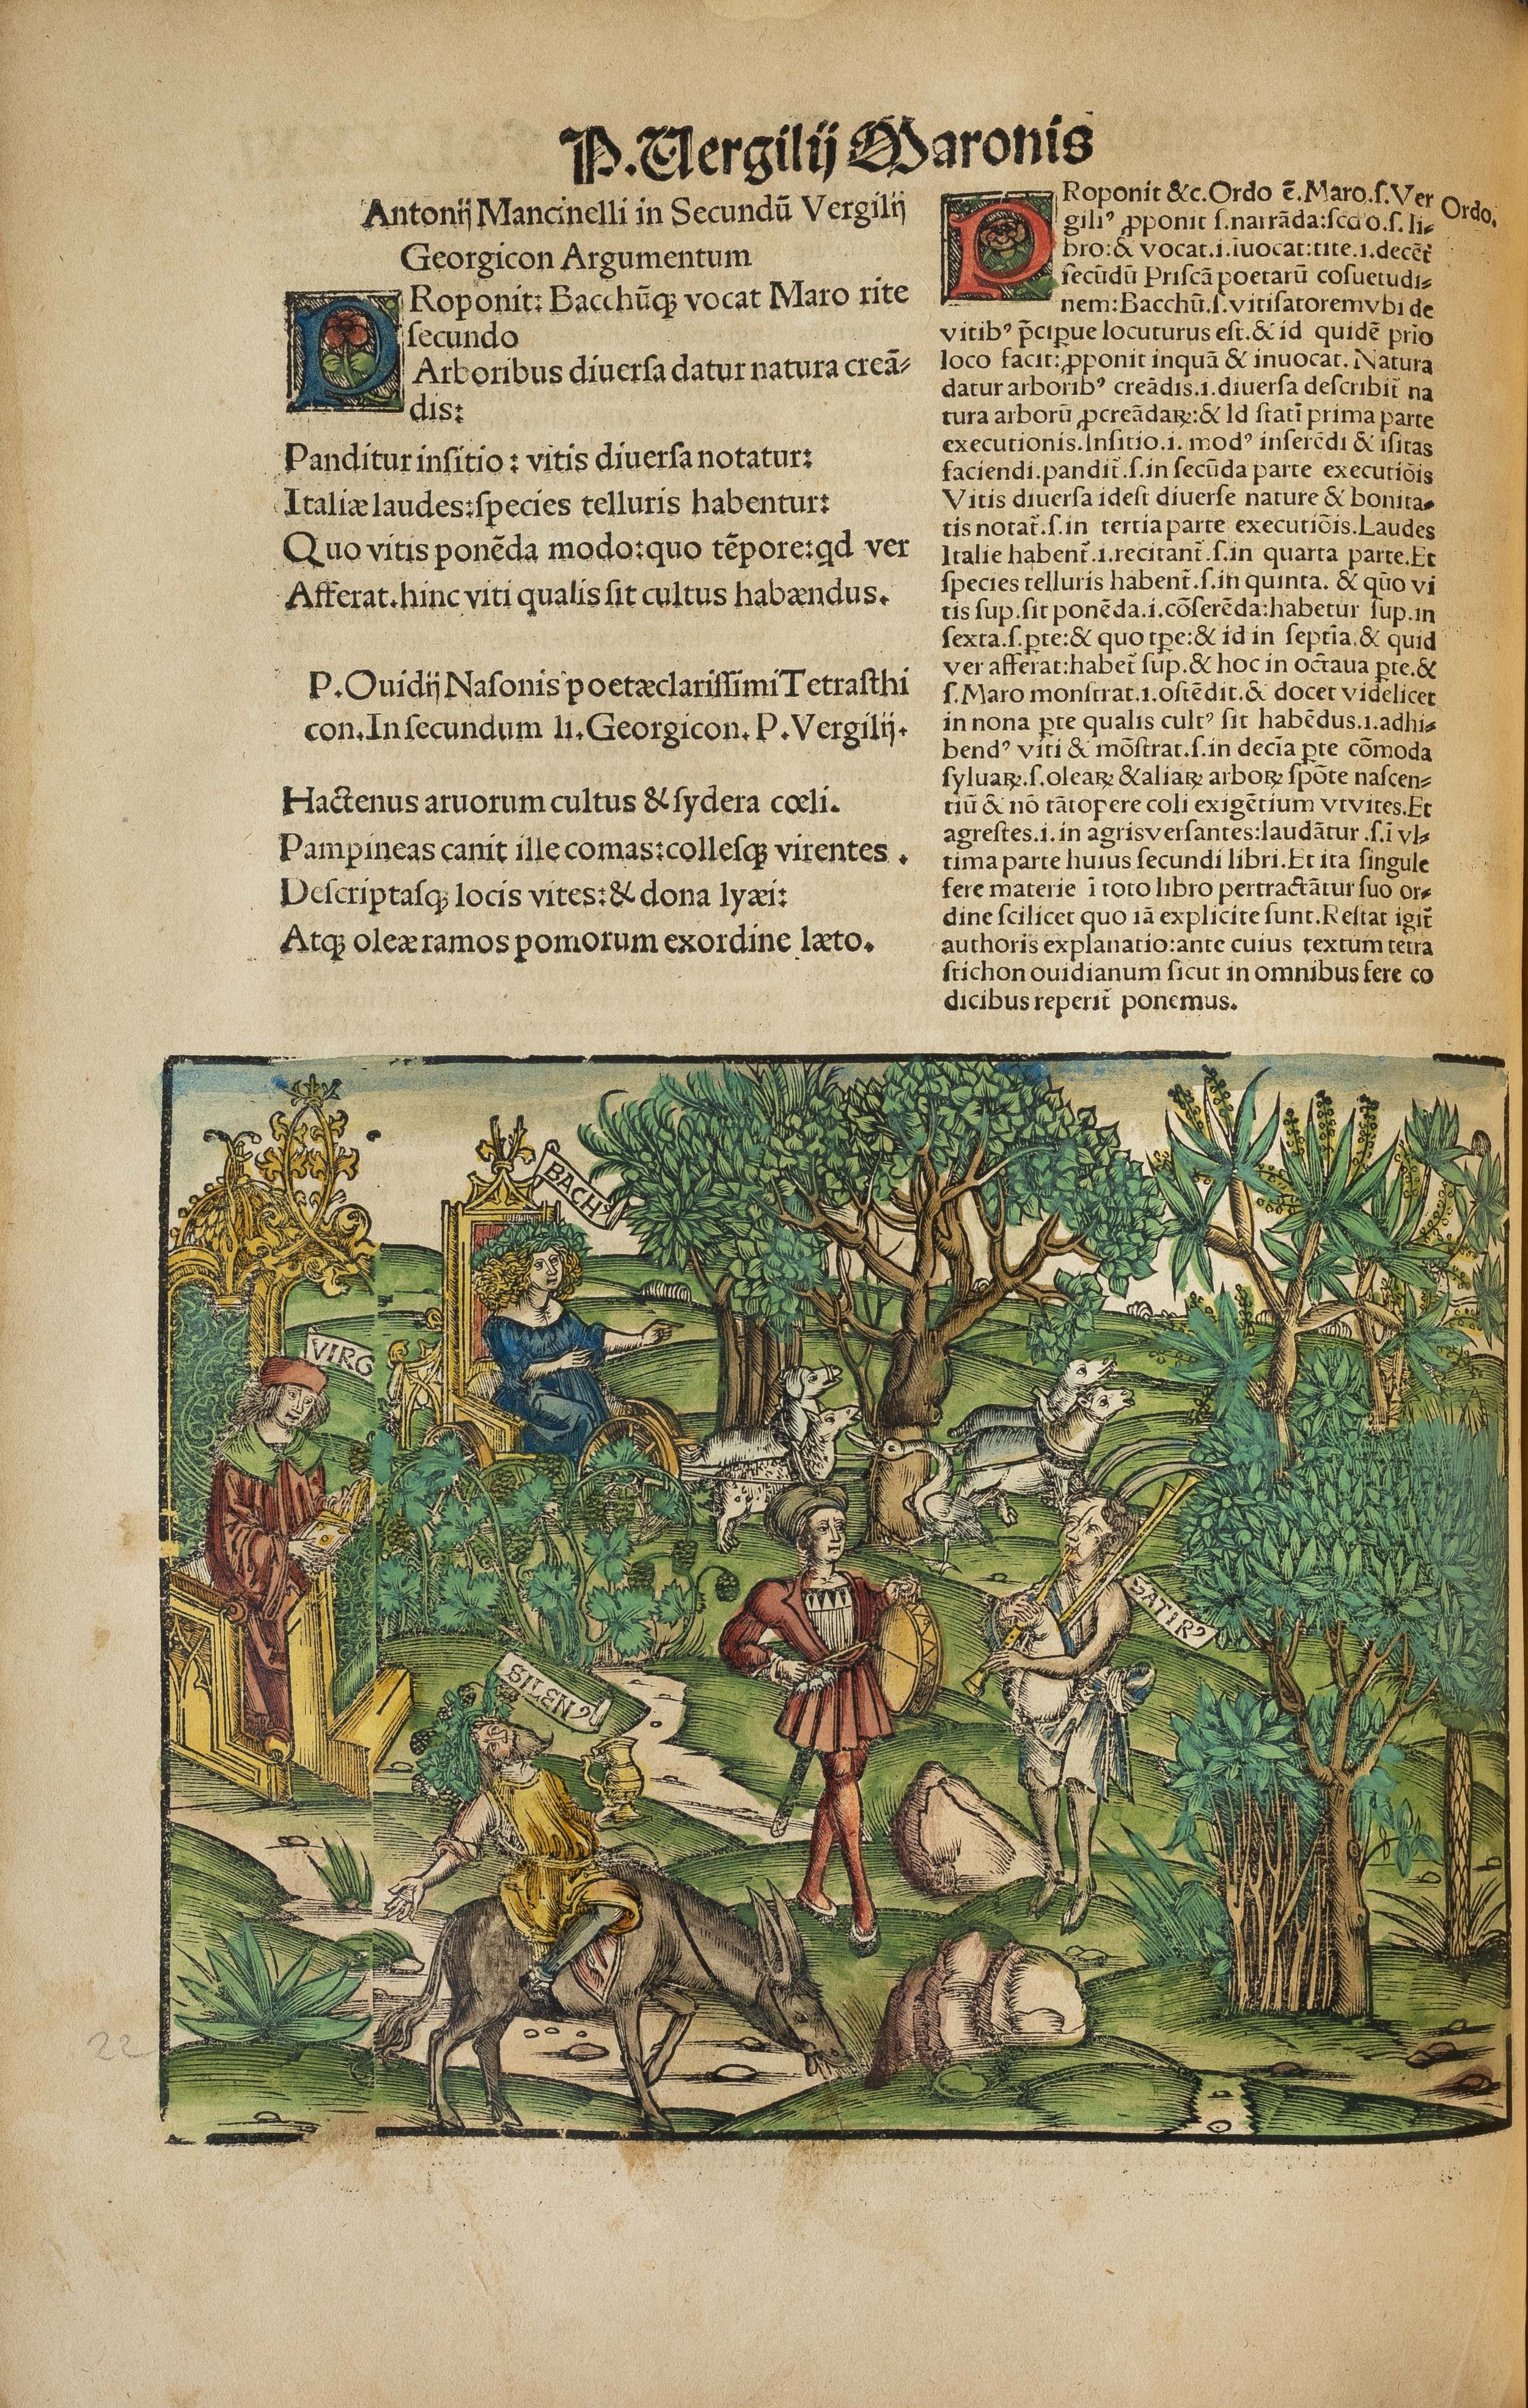 vergil-opera-1517-lyon-hand-coloured-woodcuts-for-sale-6.jpg